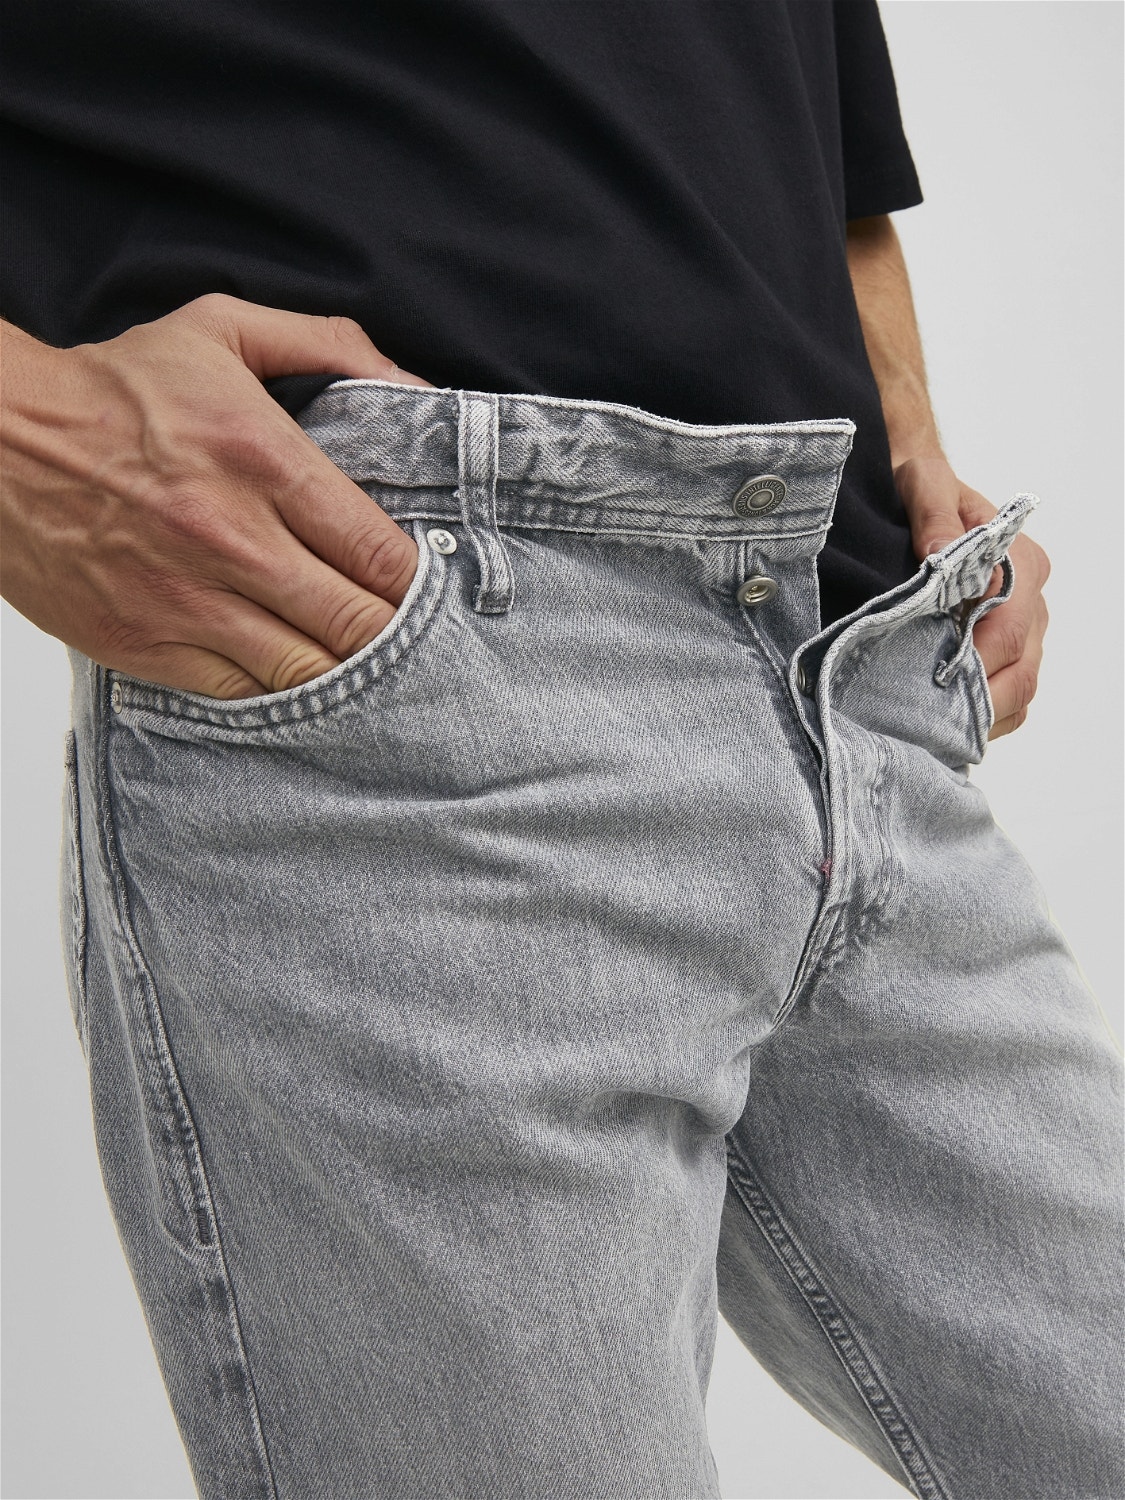 JJICHRIS 020 NOOS Relaxed Fit Jeans | Grey | Jack & Jones®